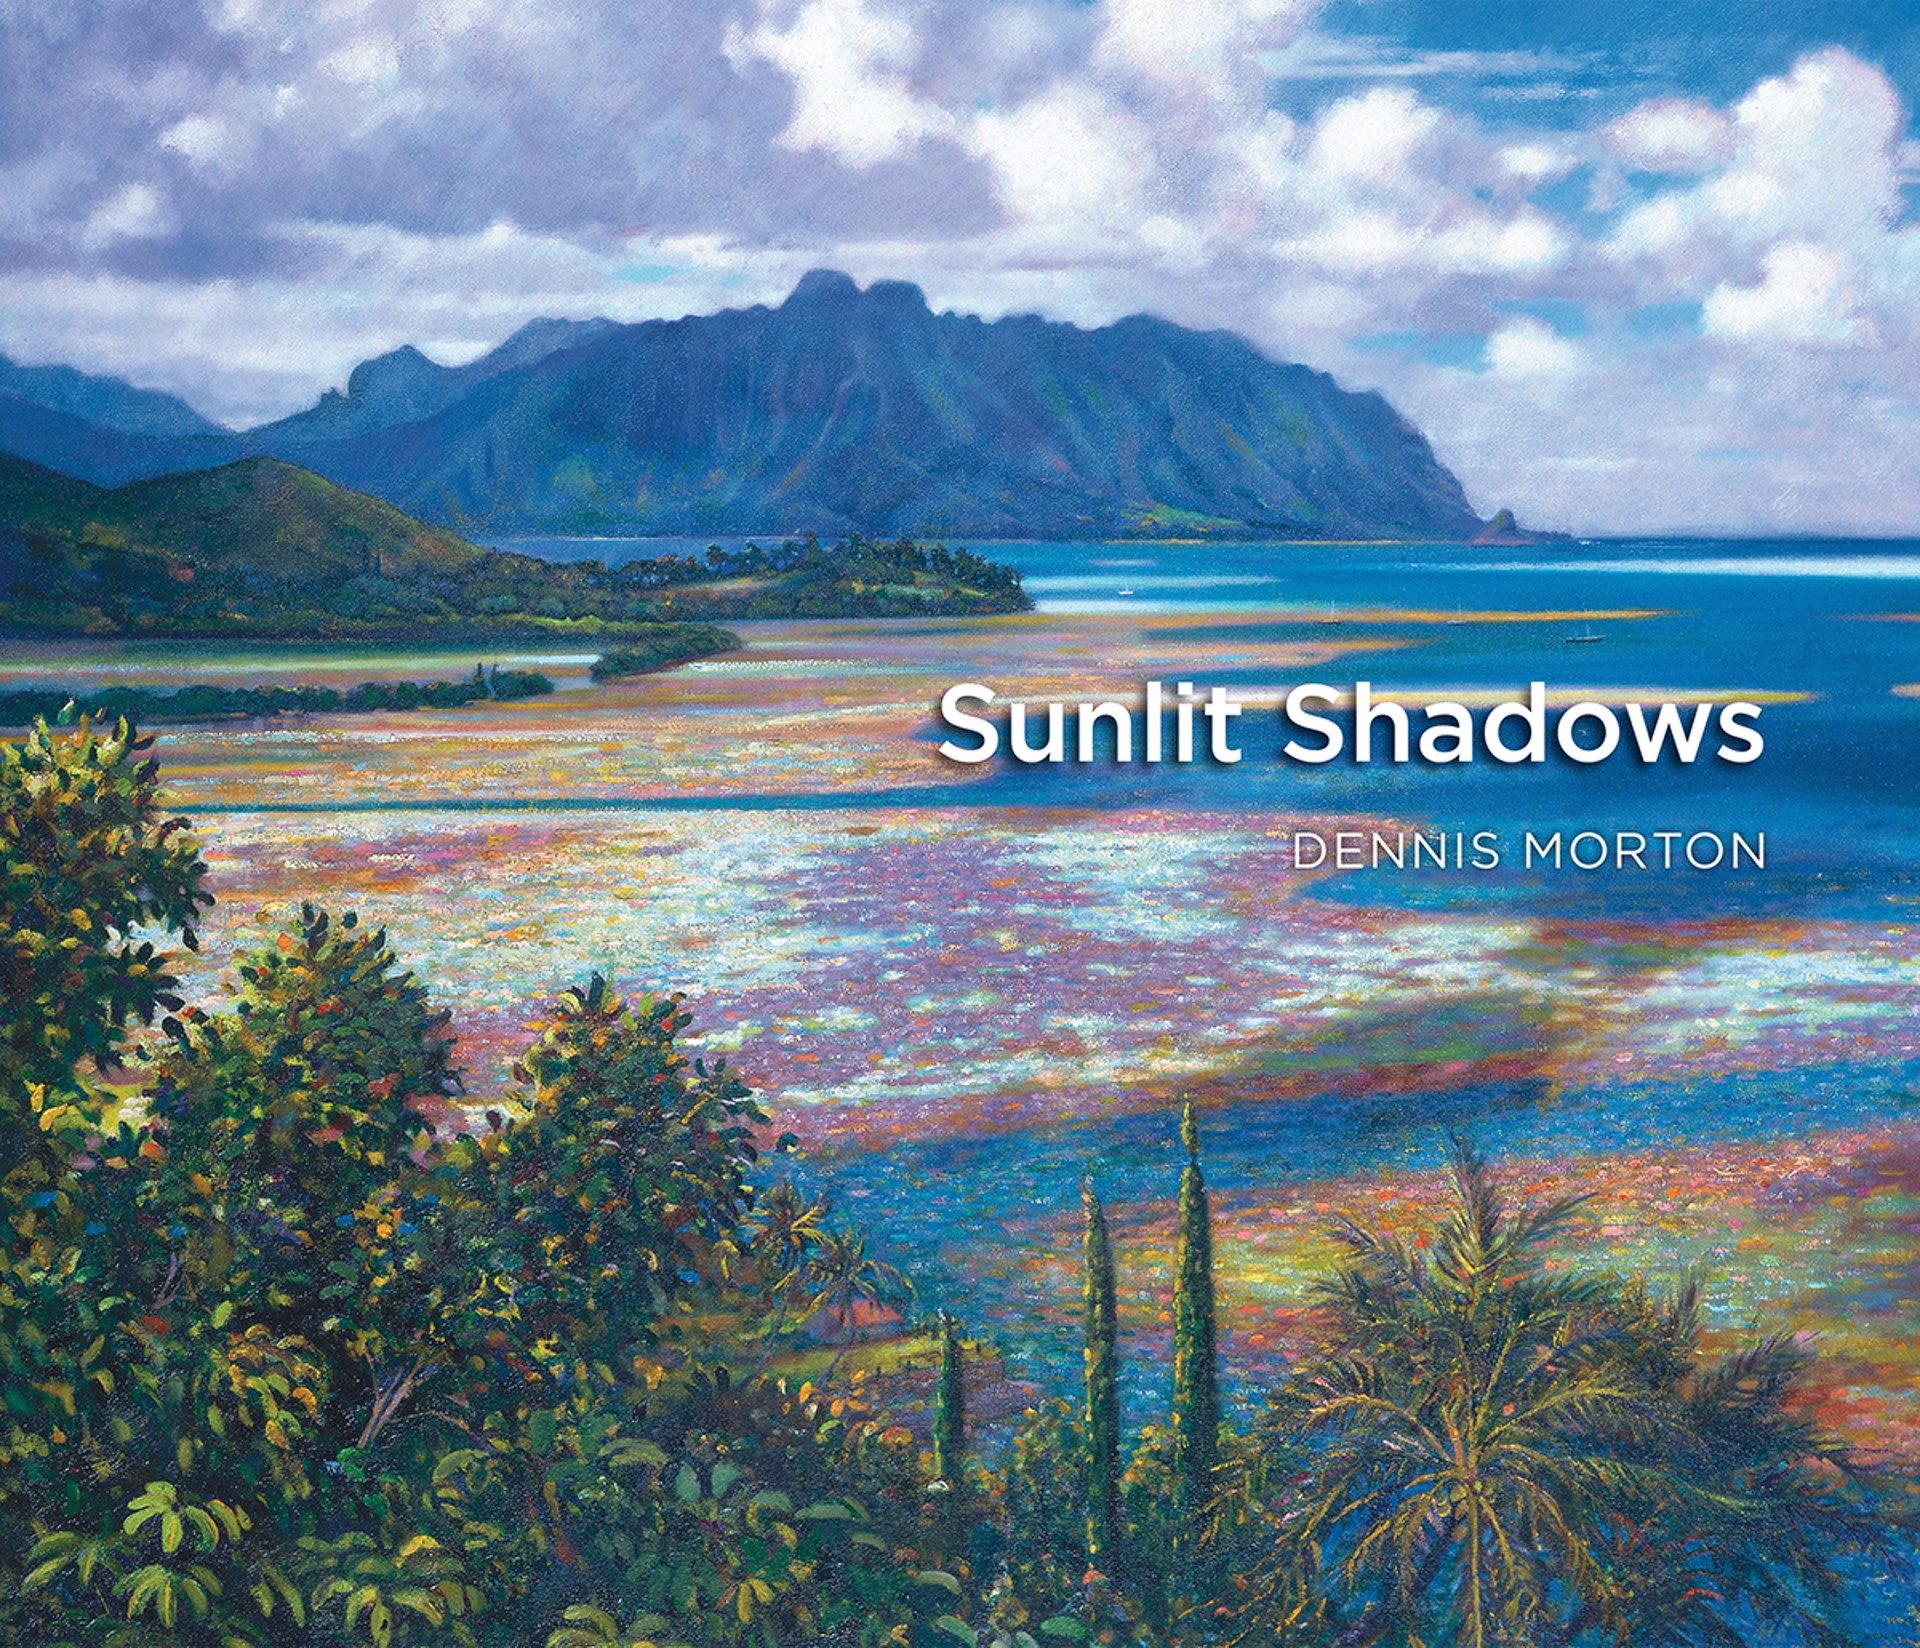 Sunlit Shadows by Dennis Morton